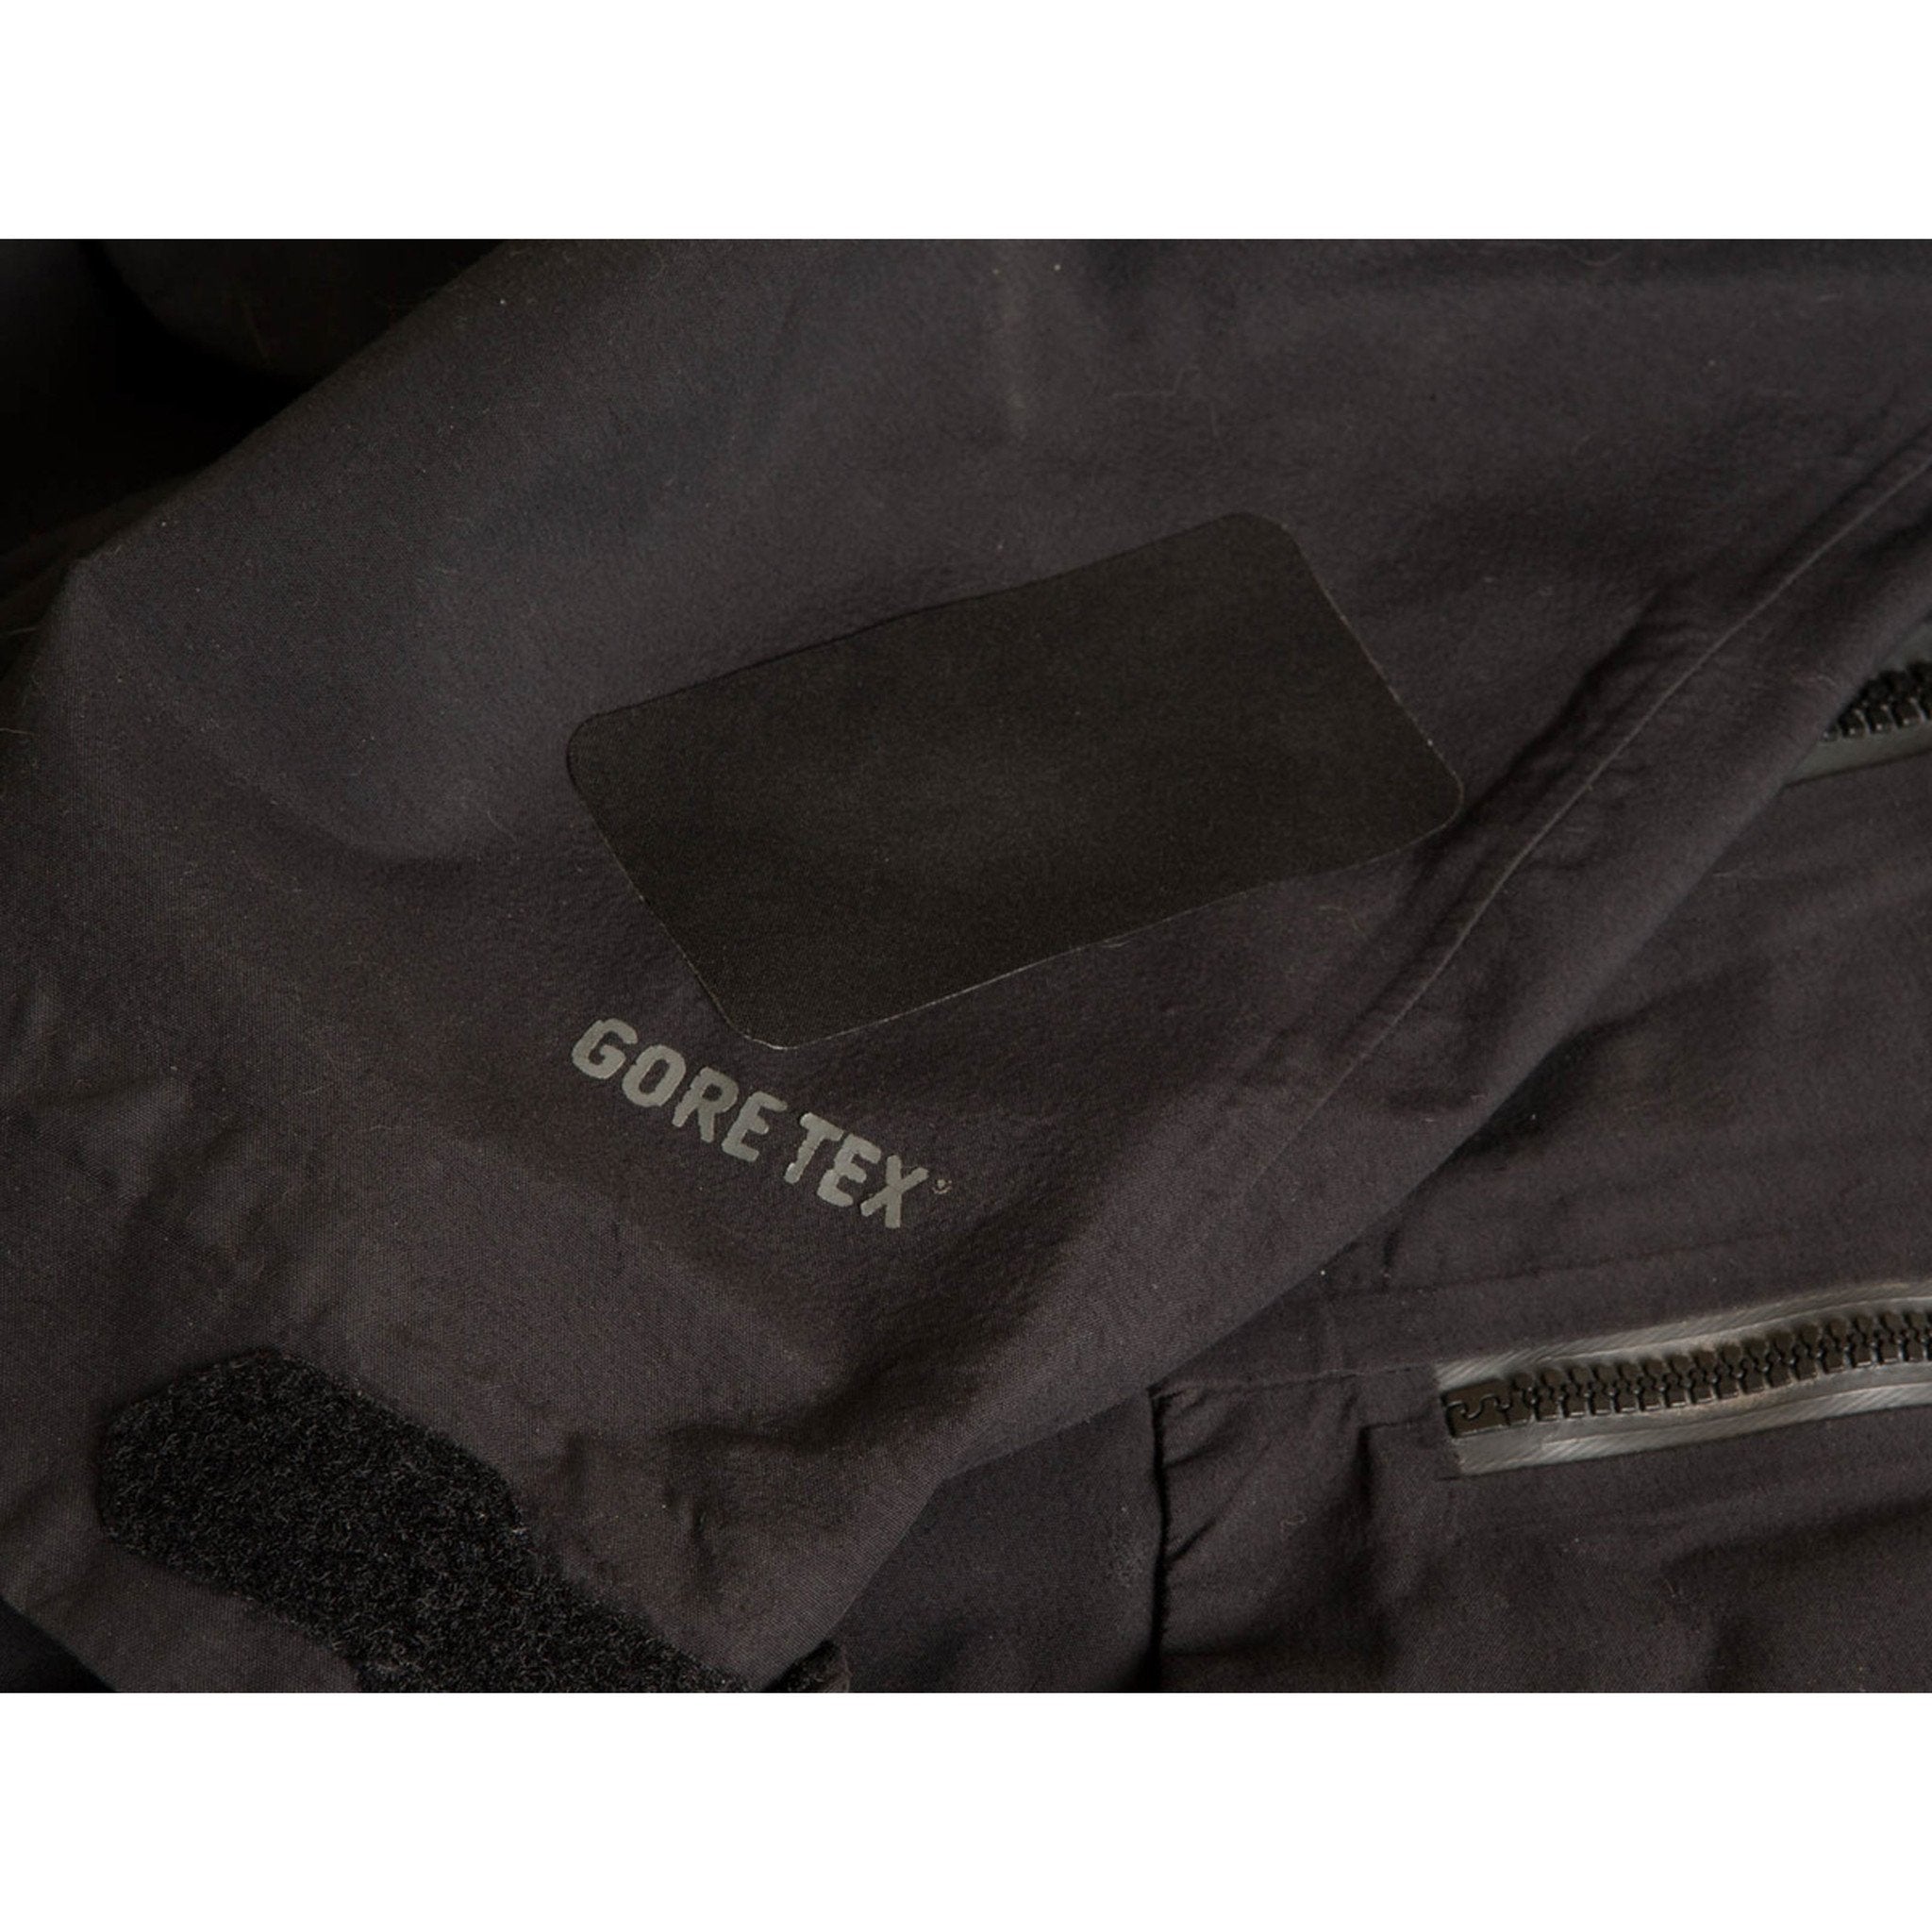 Gear Aid Gore-Tex Fabric Repair Patches l Bill & Paul's l Grand